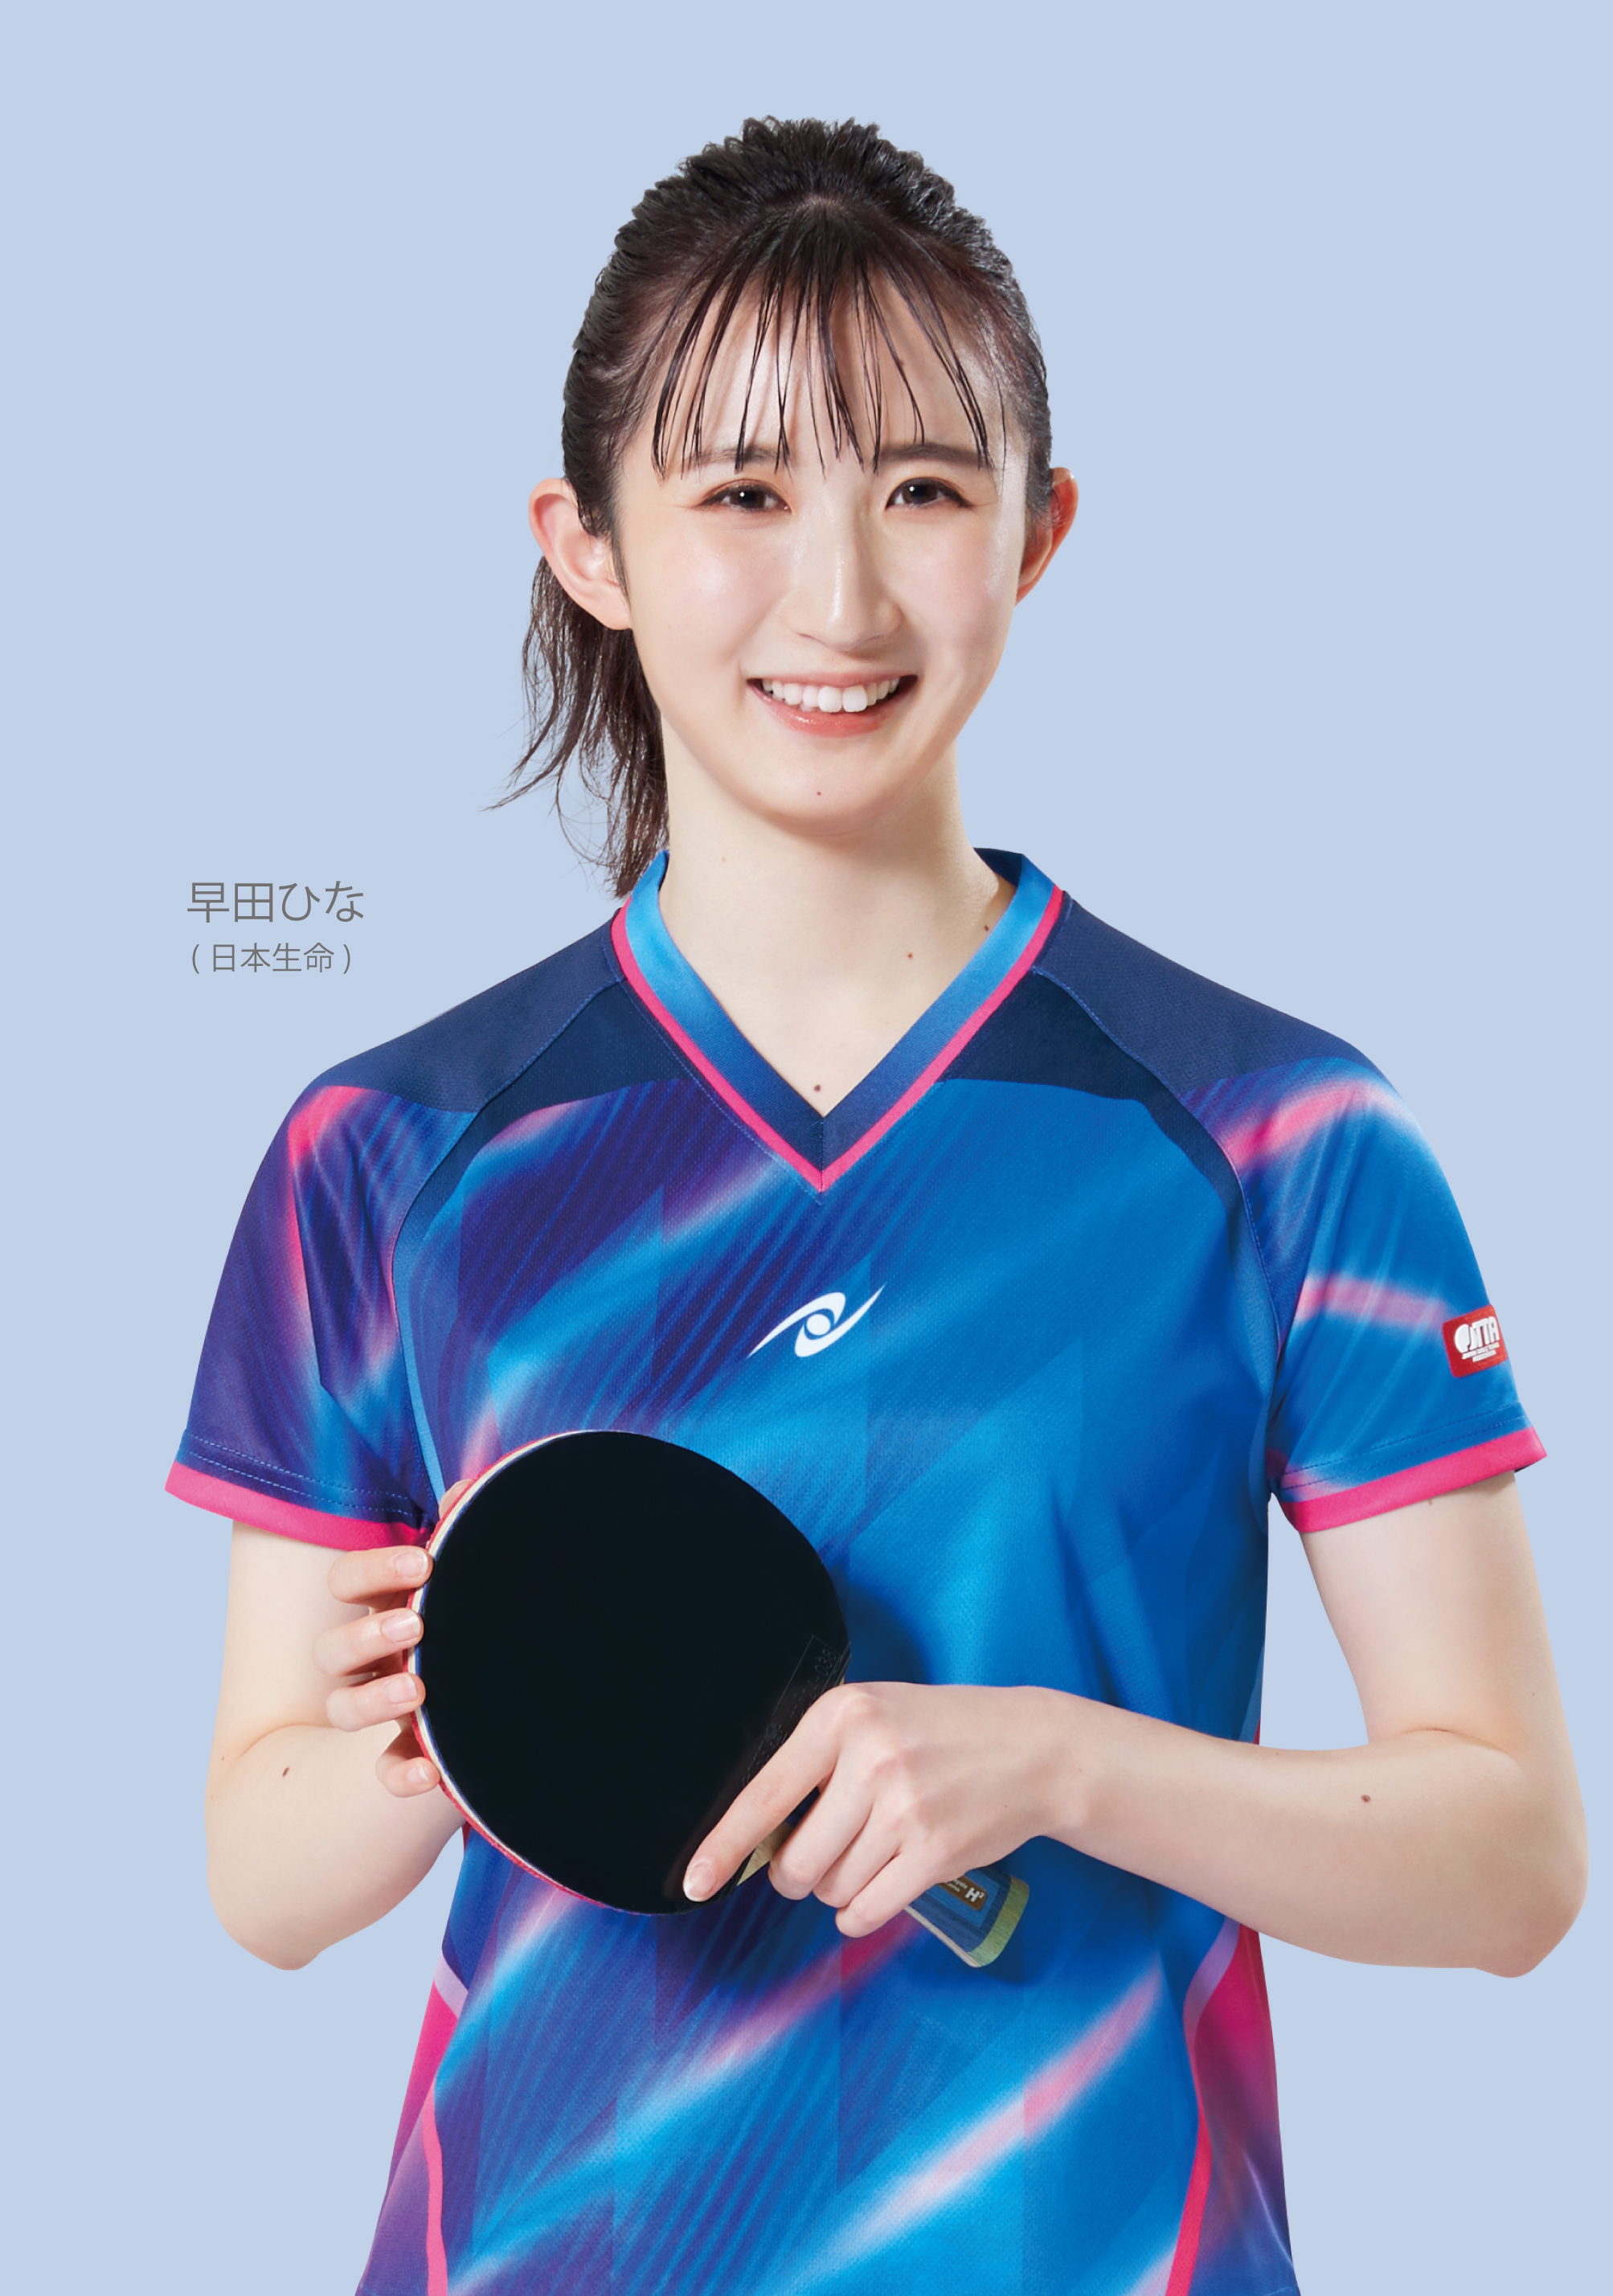 Nittaku(ニッタク) 日本卓球 | 卓球用品の総合用具メーカーNittaku(ニッタク) 日本卓球株式会社の公式ホームページ